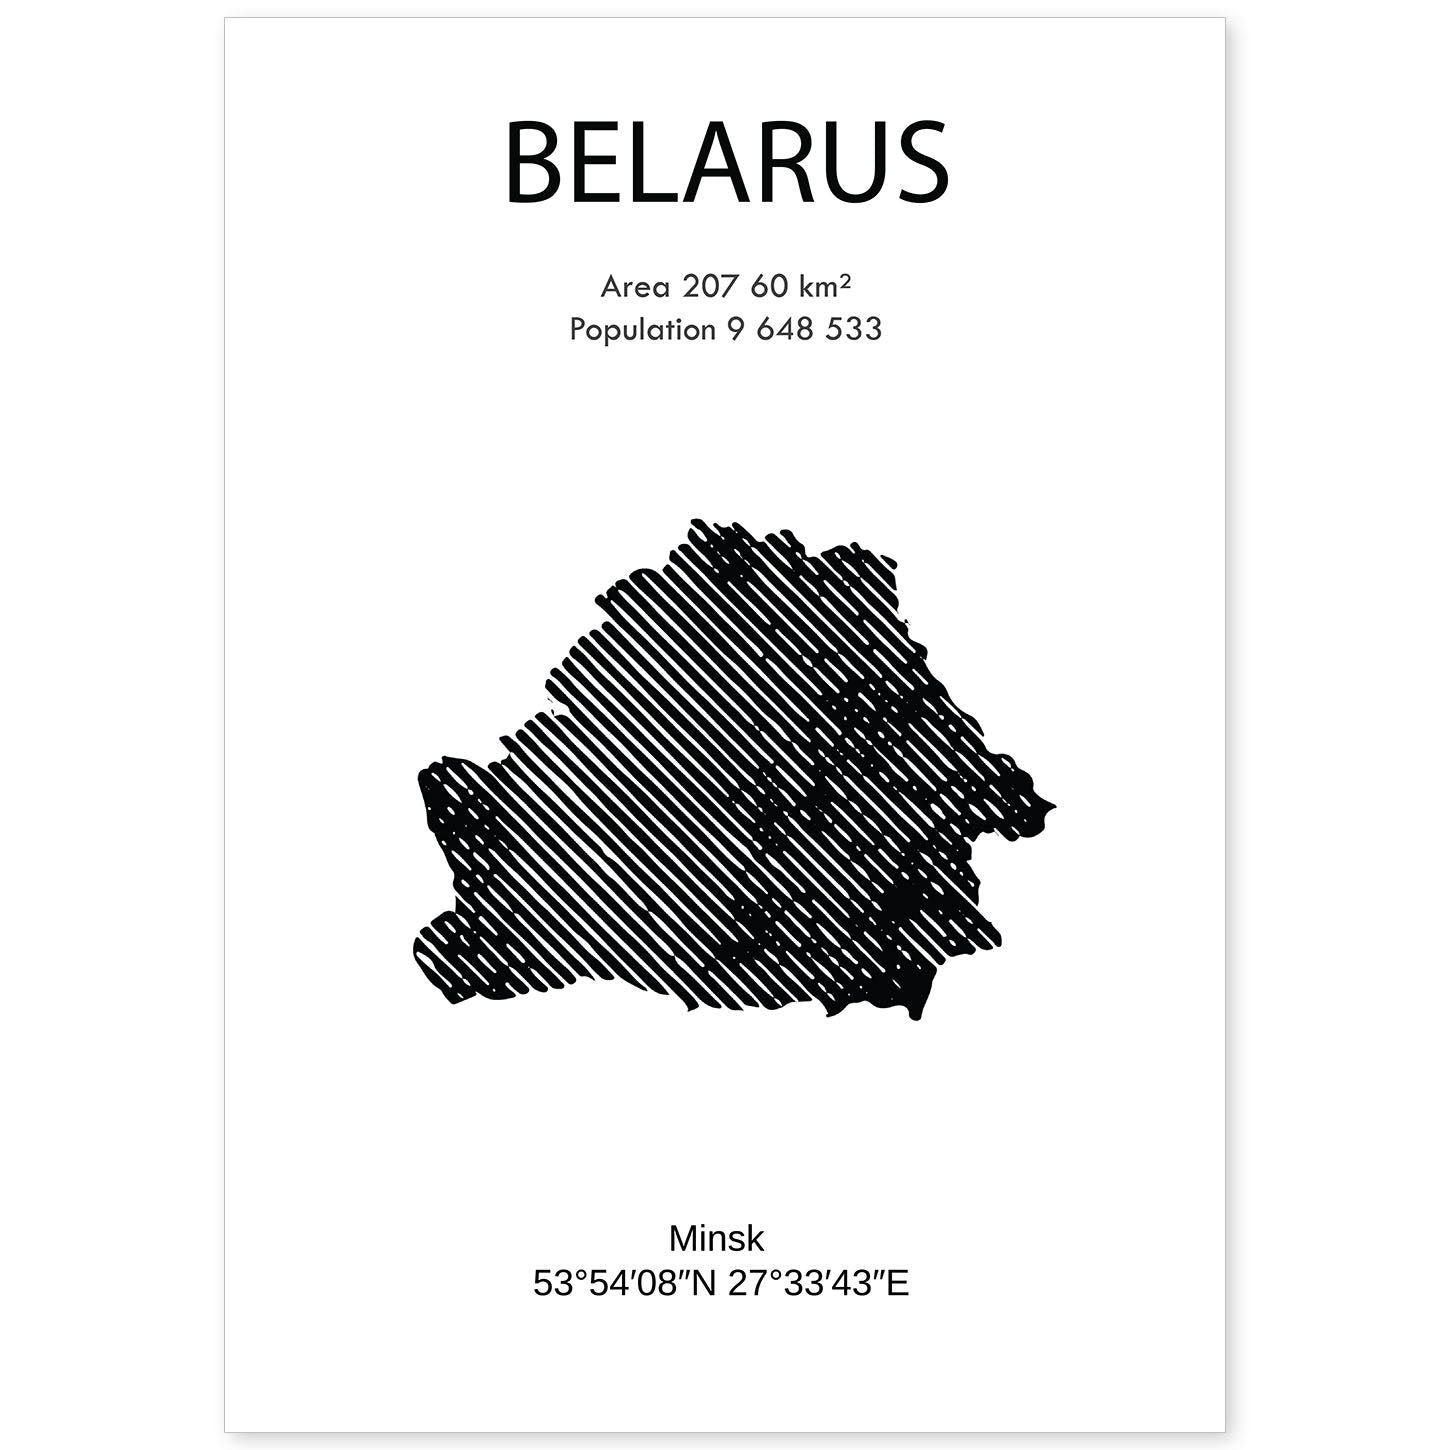 Poster de Belarus. Láminas de paises y continentes del mundo.-Artwork-Nacnic-A4-Sin marco-Nacnic Estudio SL